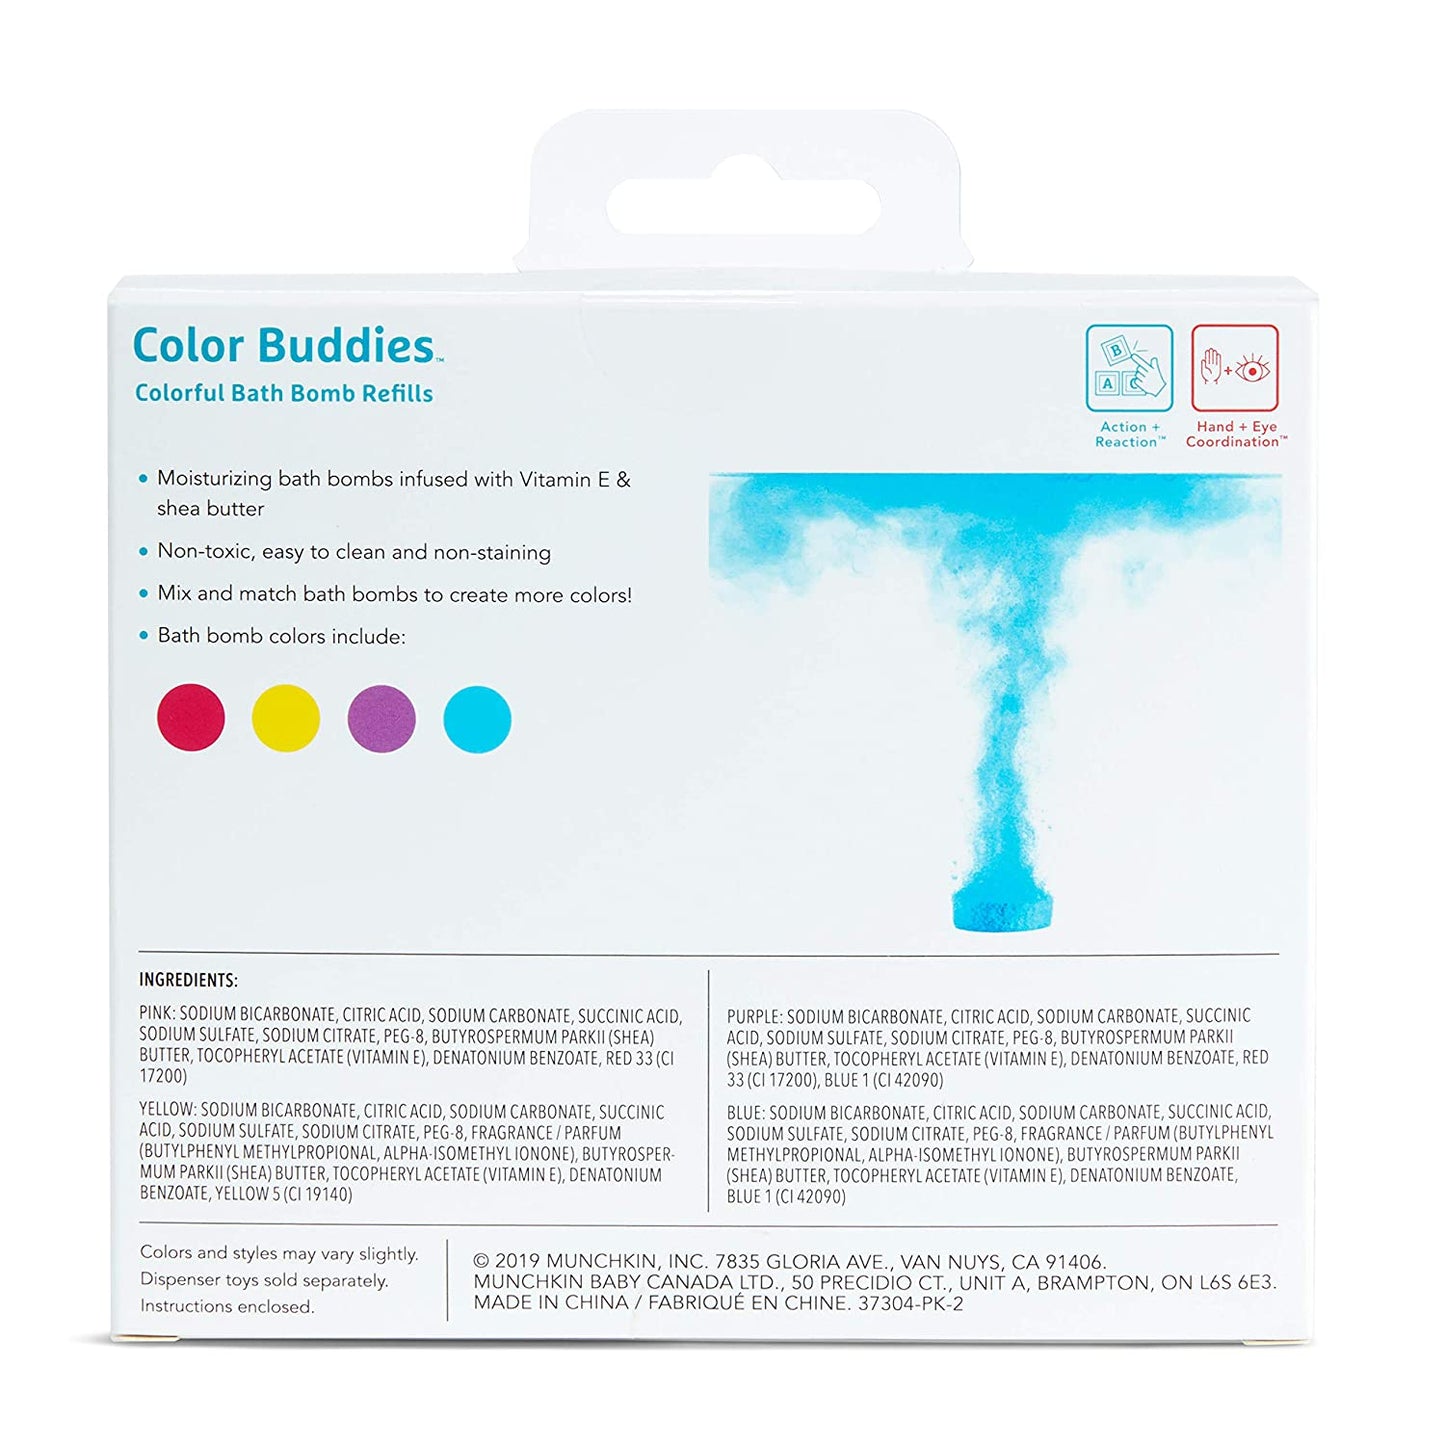 Munchkin Color Buddies Moisturizing Bath Water Color Tablets